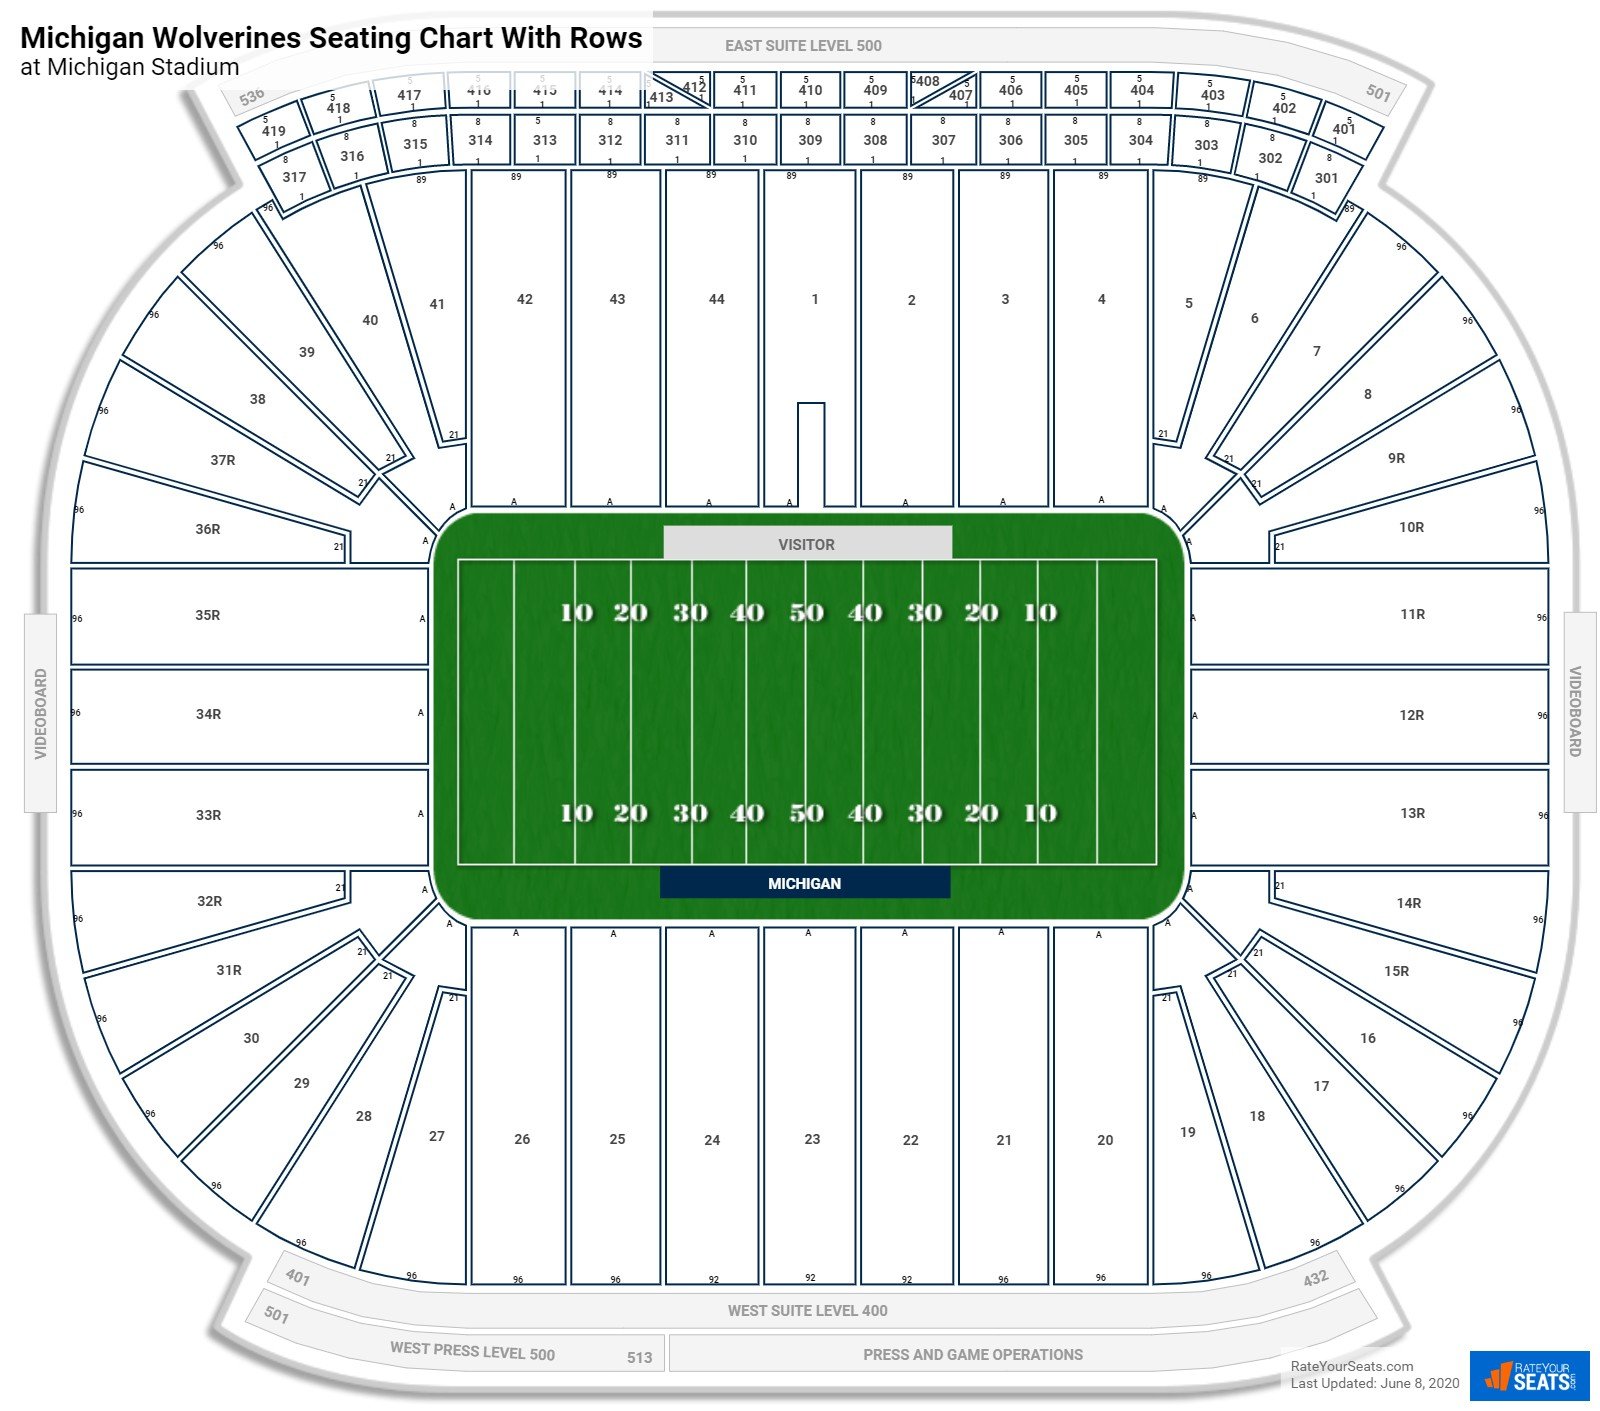 Ross Ade Stadium Seating Chart Vivid Seats.